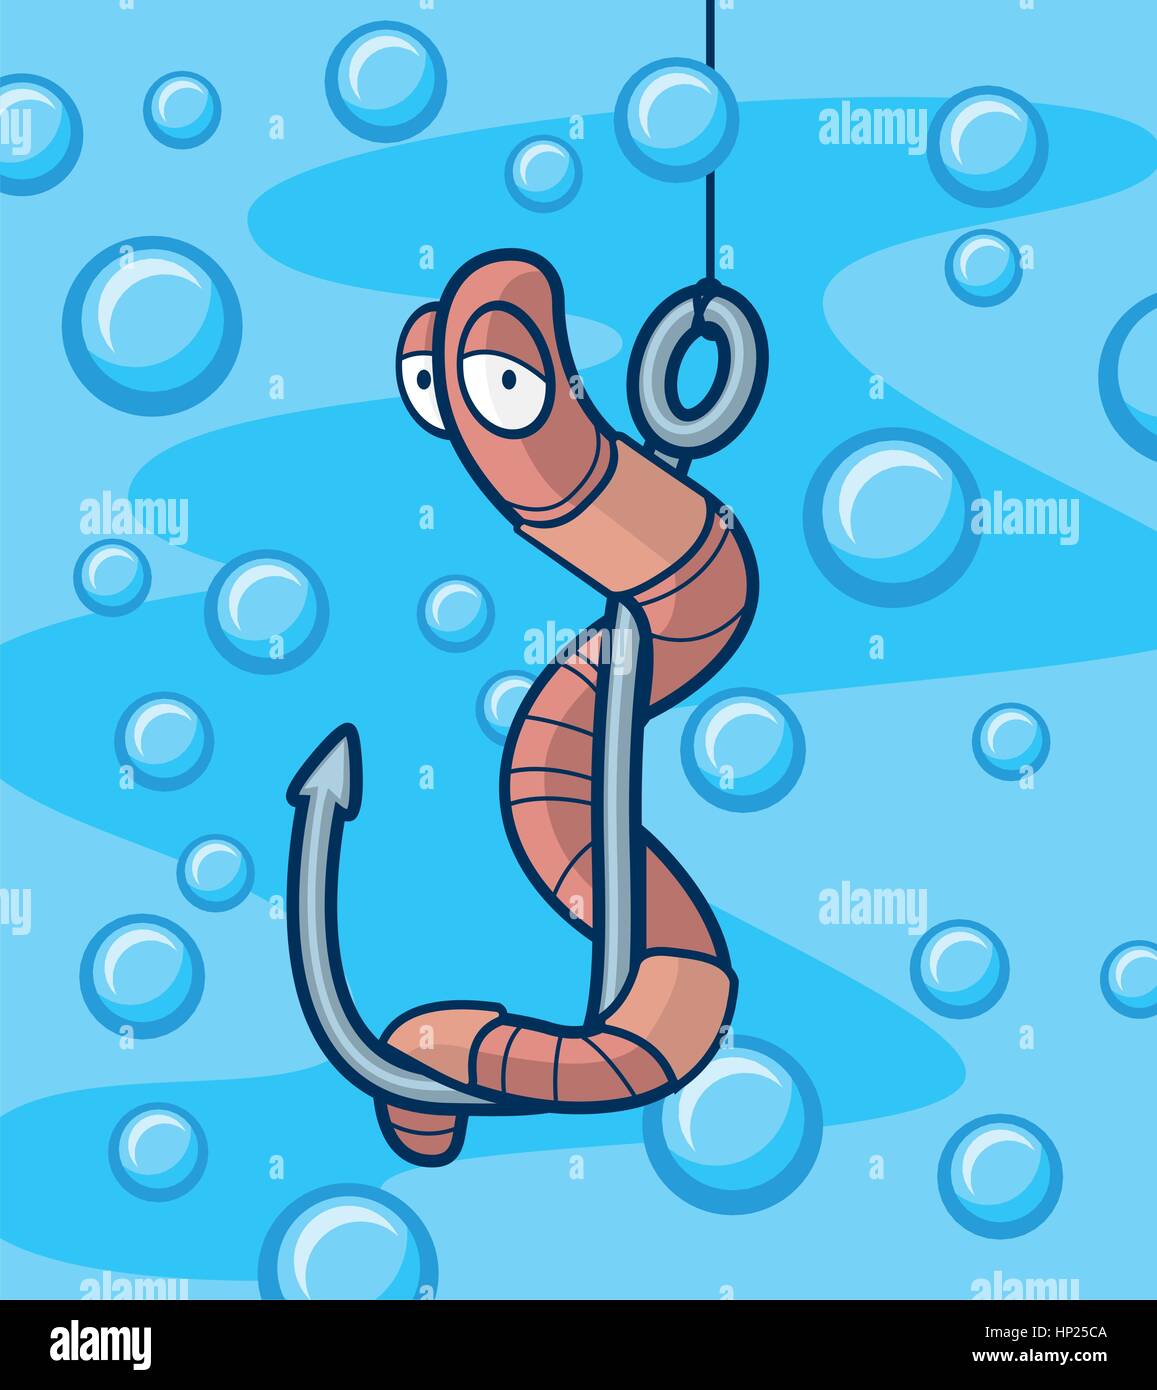 A cartoon worm on a fishing hook. Stock Vector